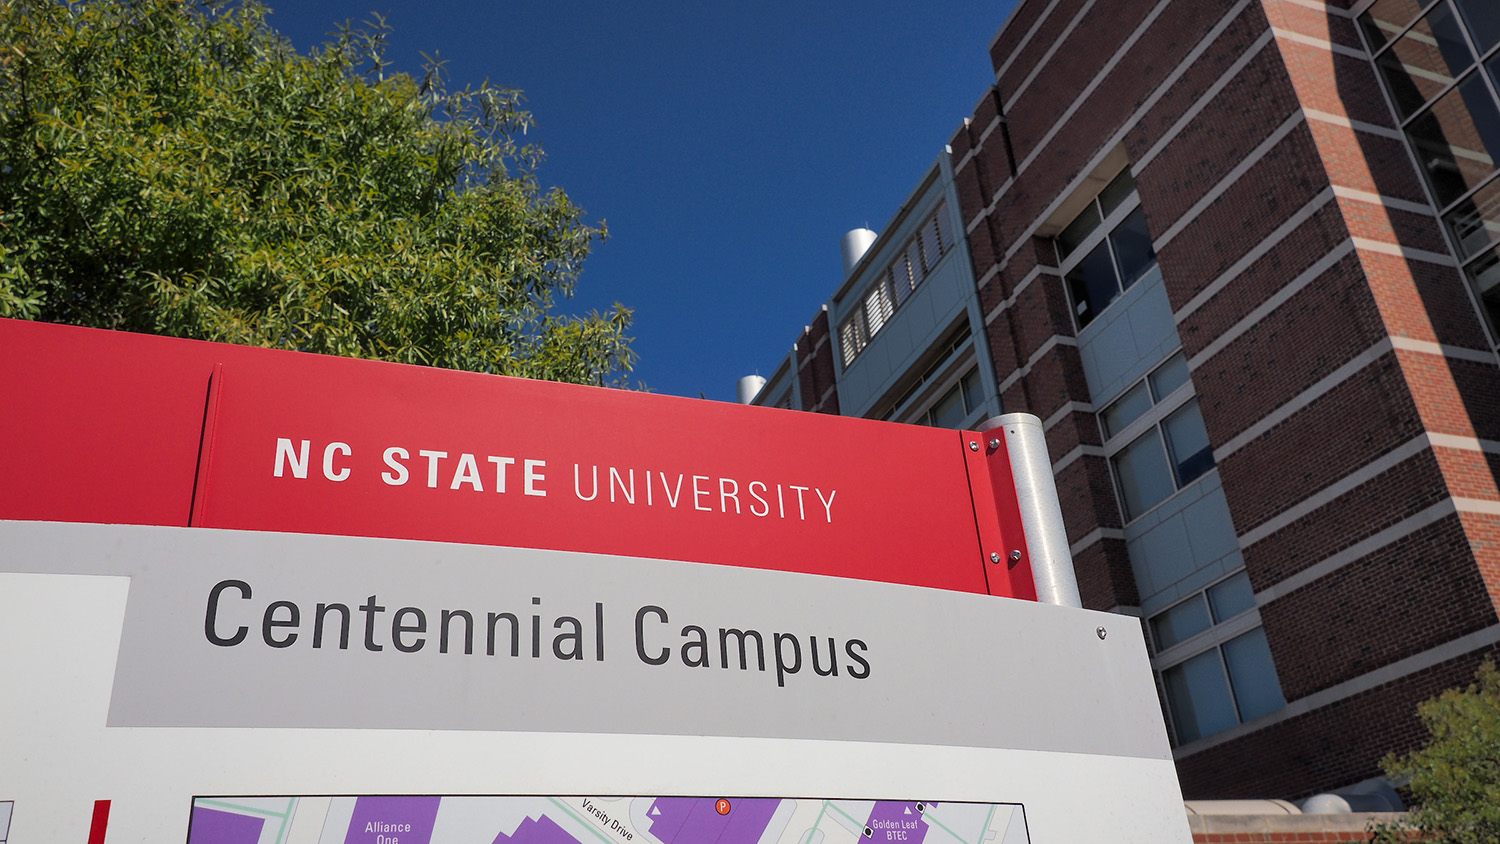 Centennial Campus sign and map